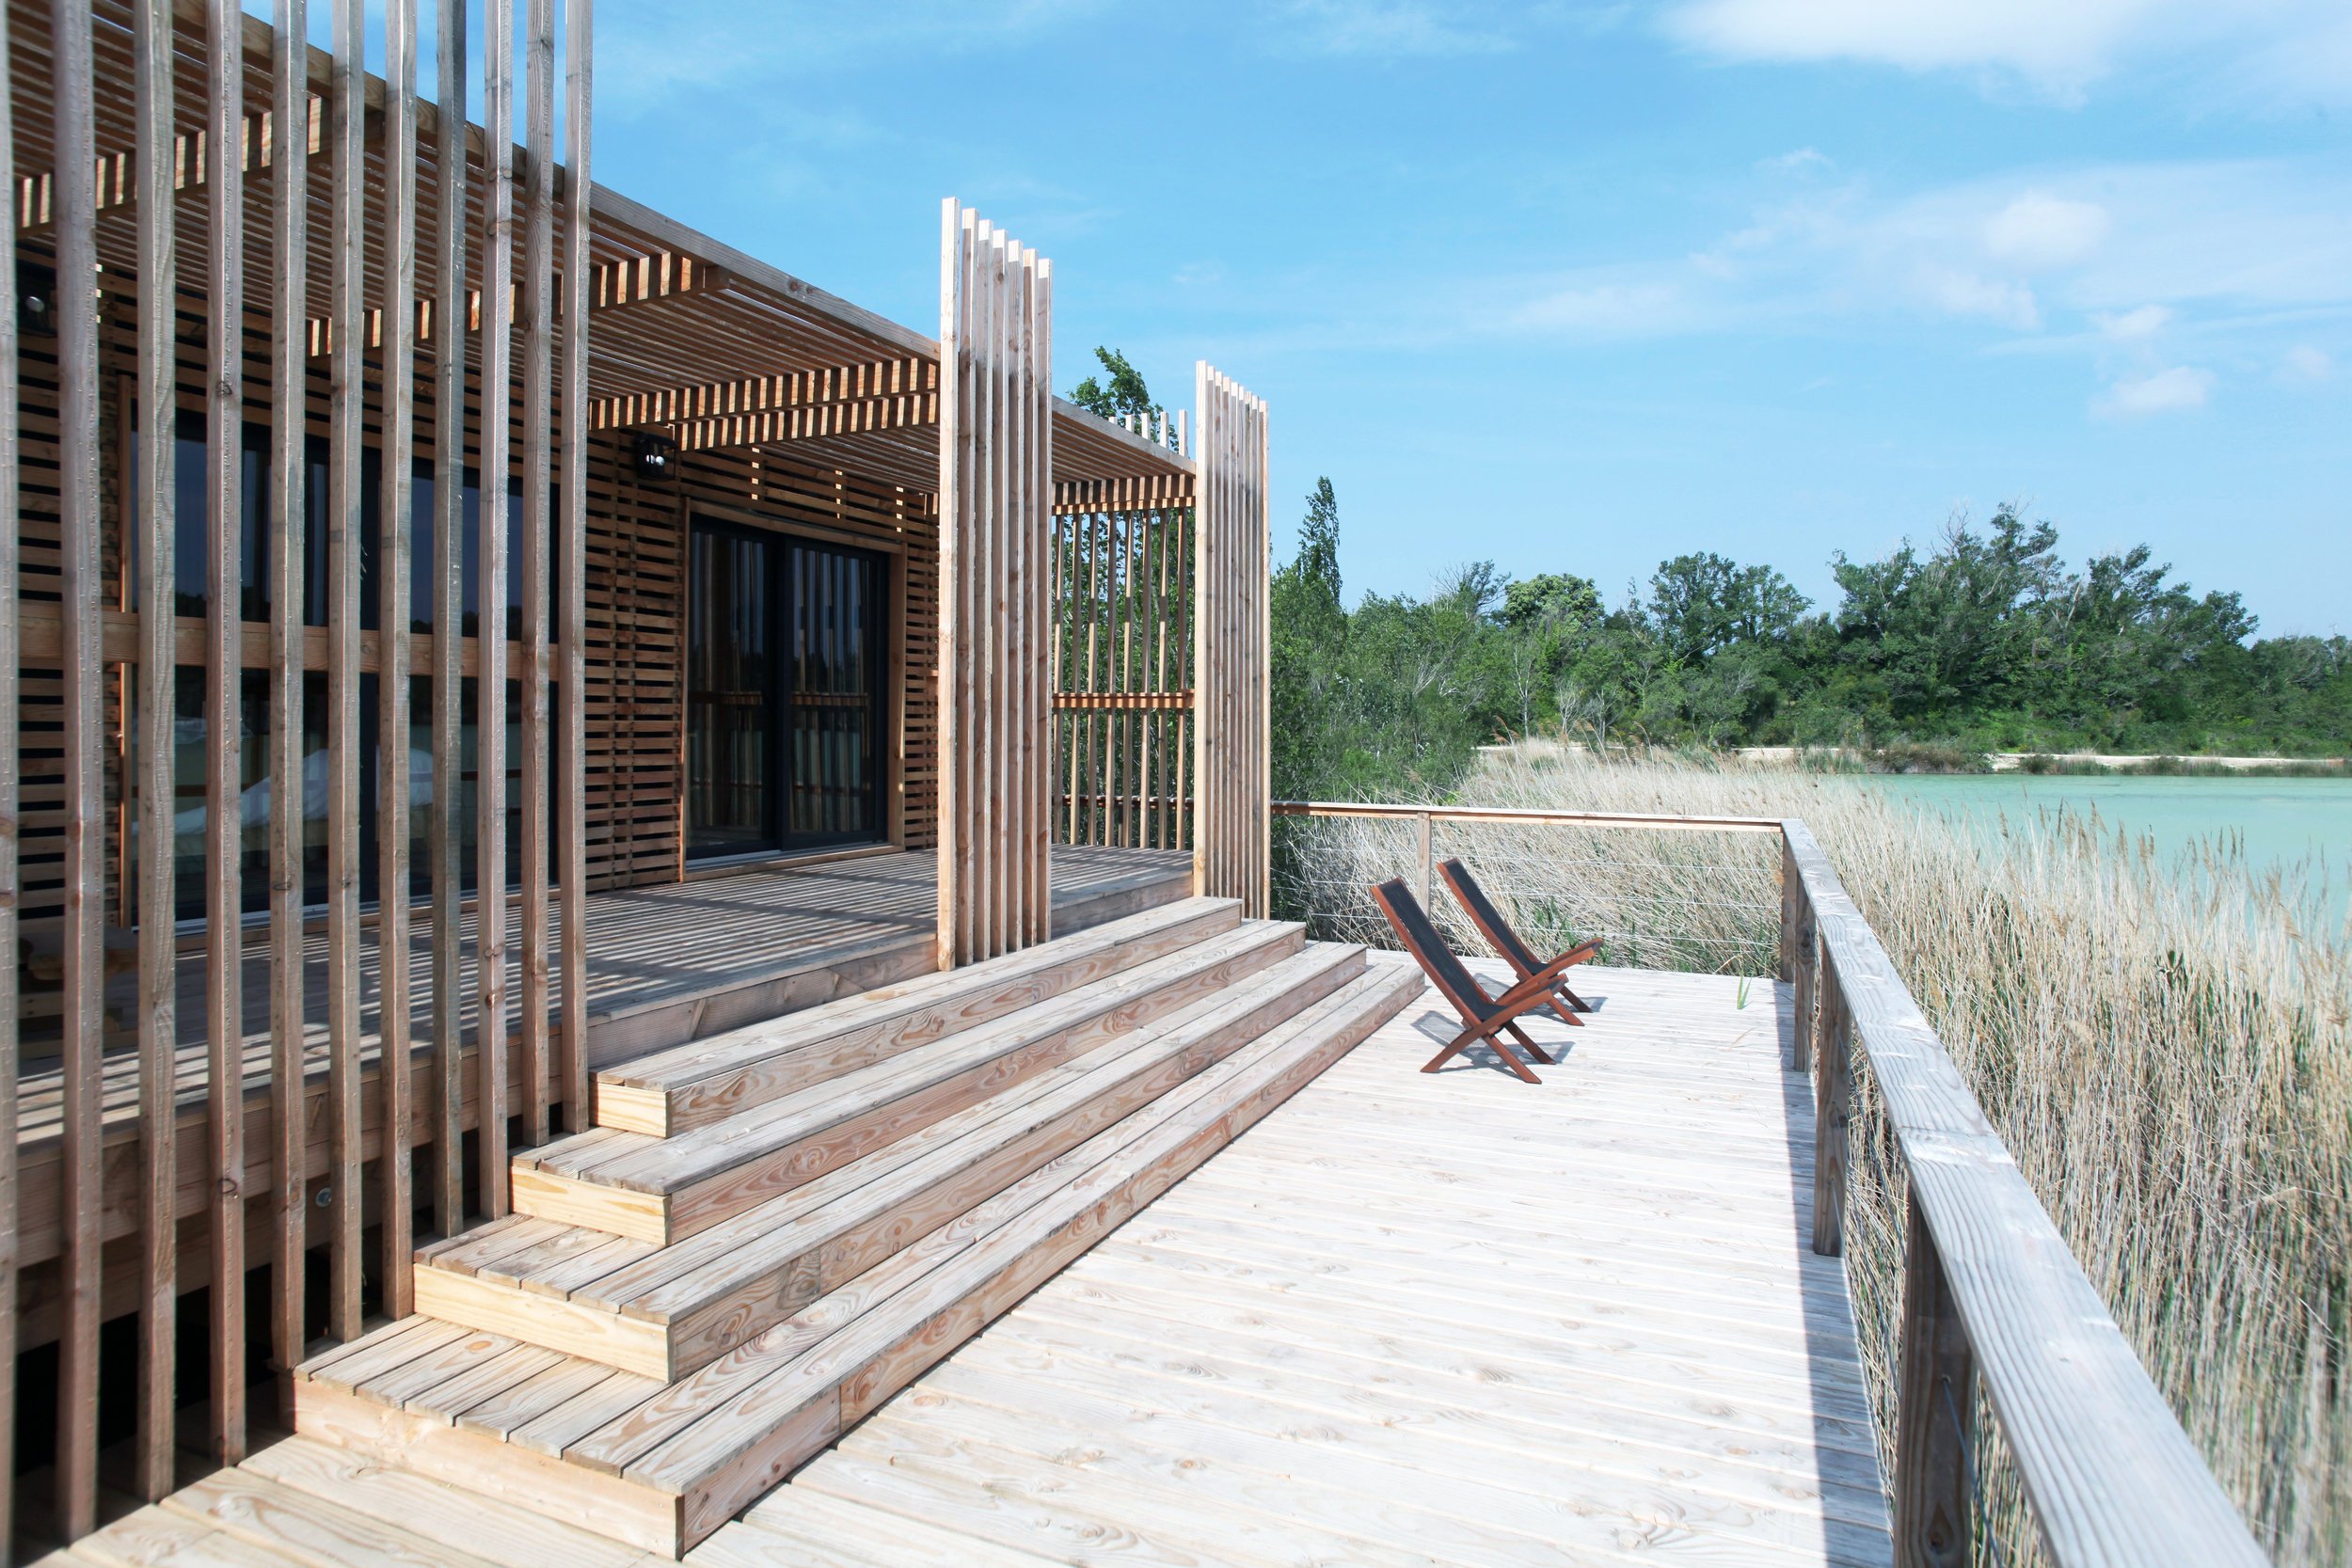 Atelier+LAVIT+wood+cabin+on+pilotis+7.jpg